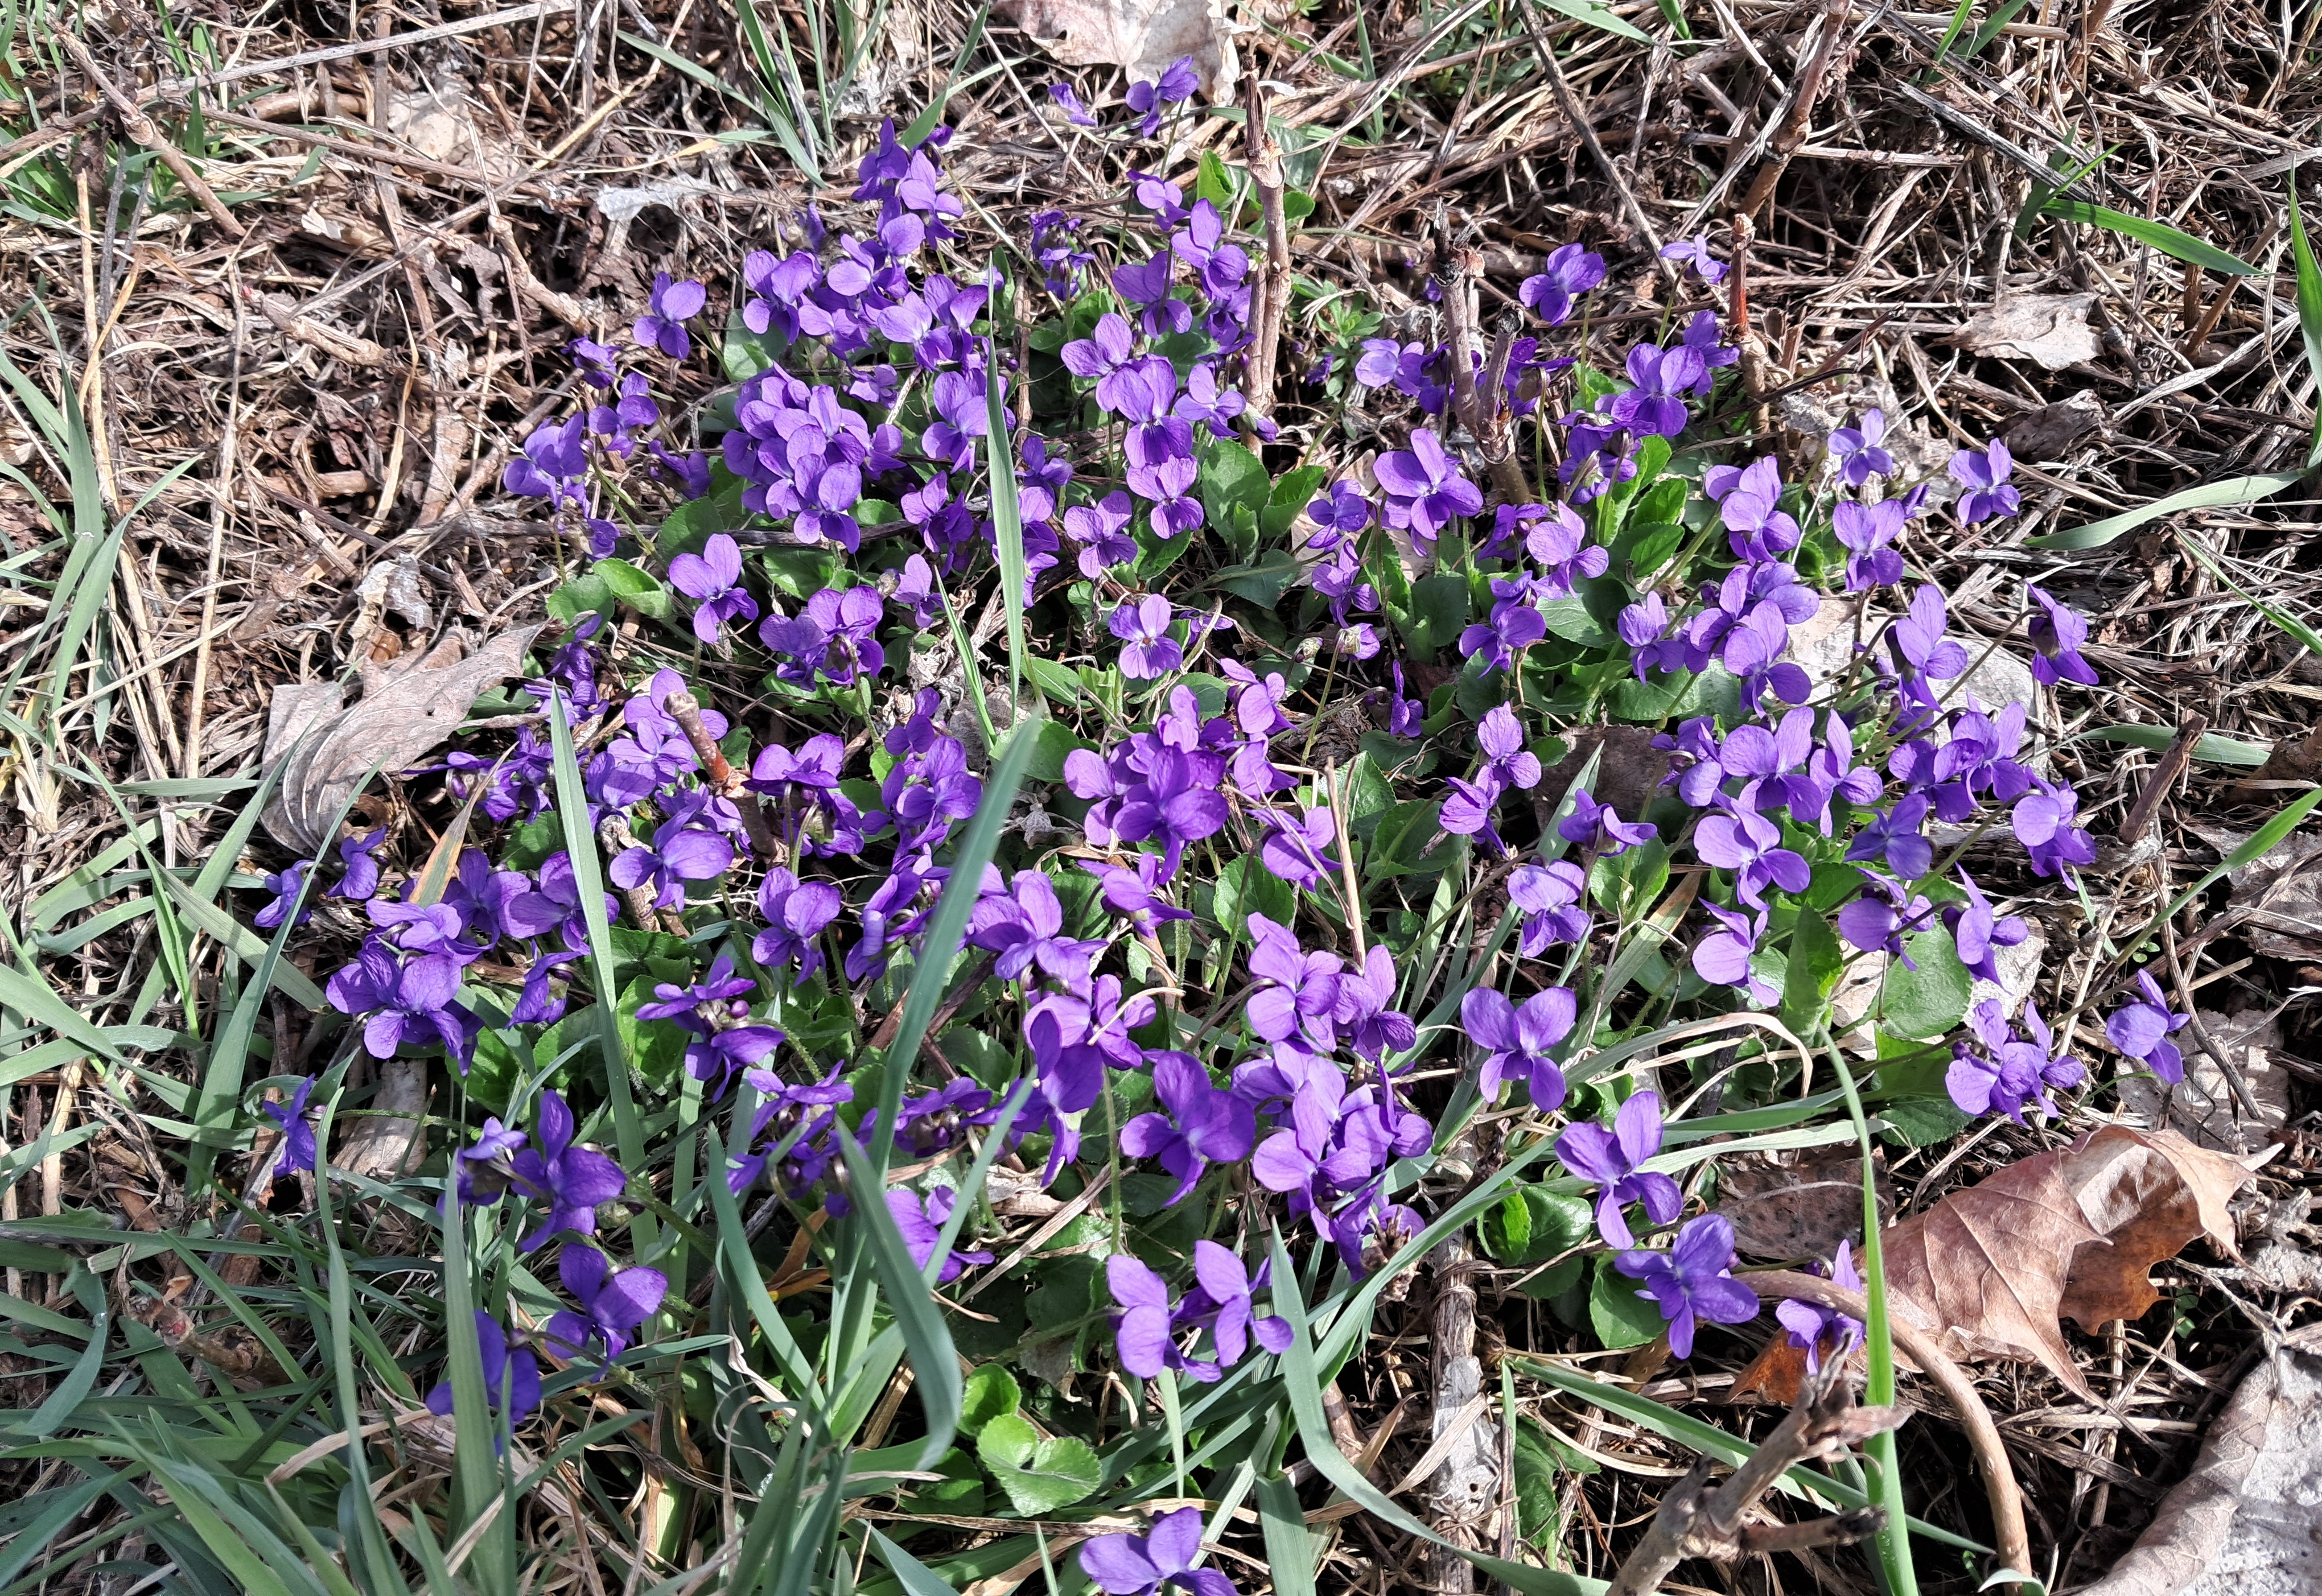 Violet viola flowers, ammonia and acetic acid